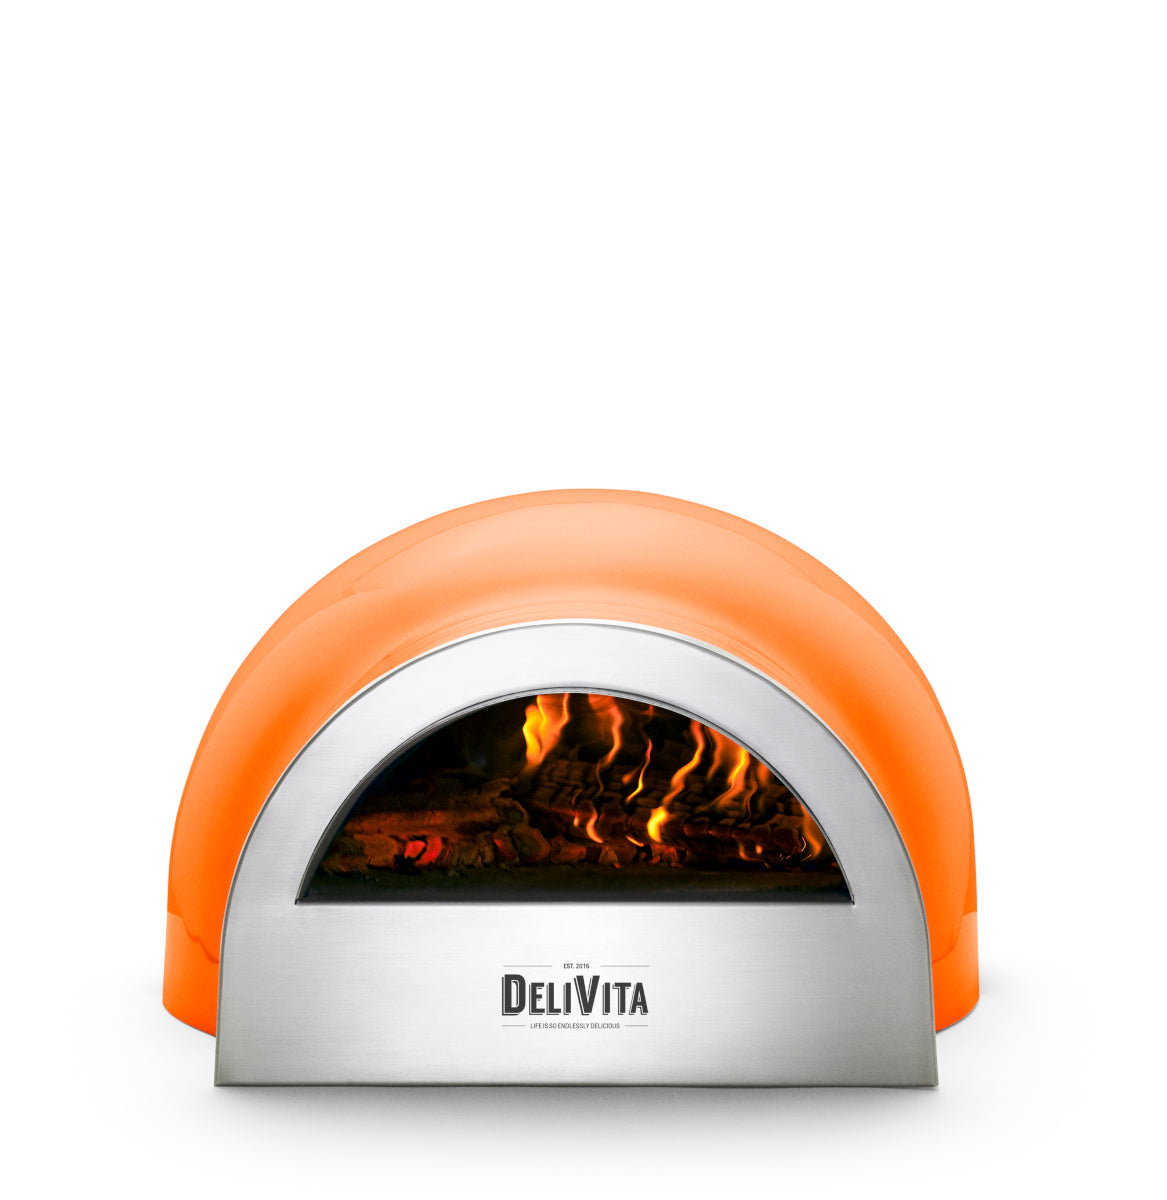 DeliVita The Orange Blaze Oven - Wood Fired Pizza Oven